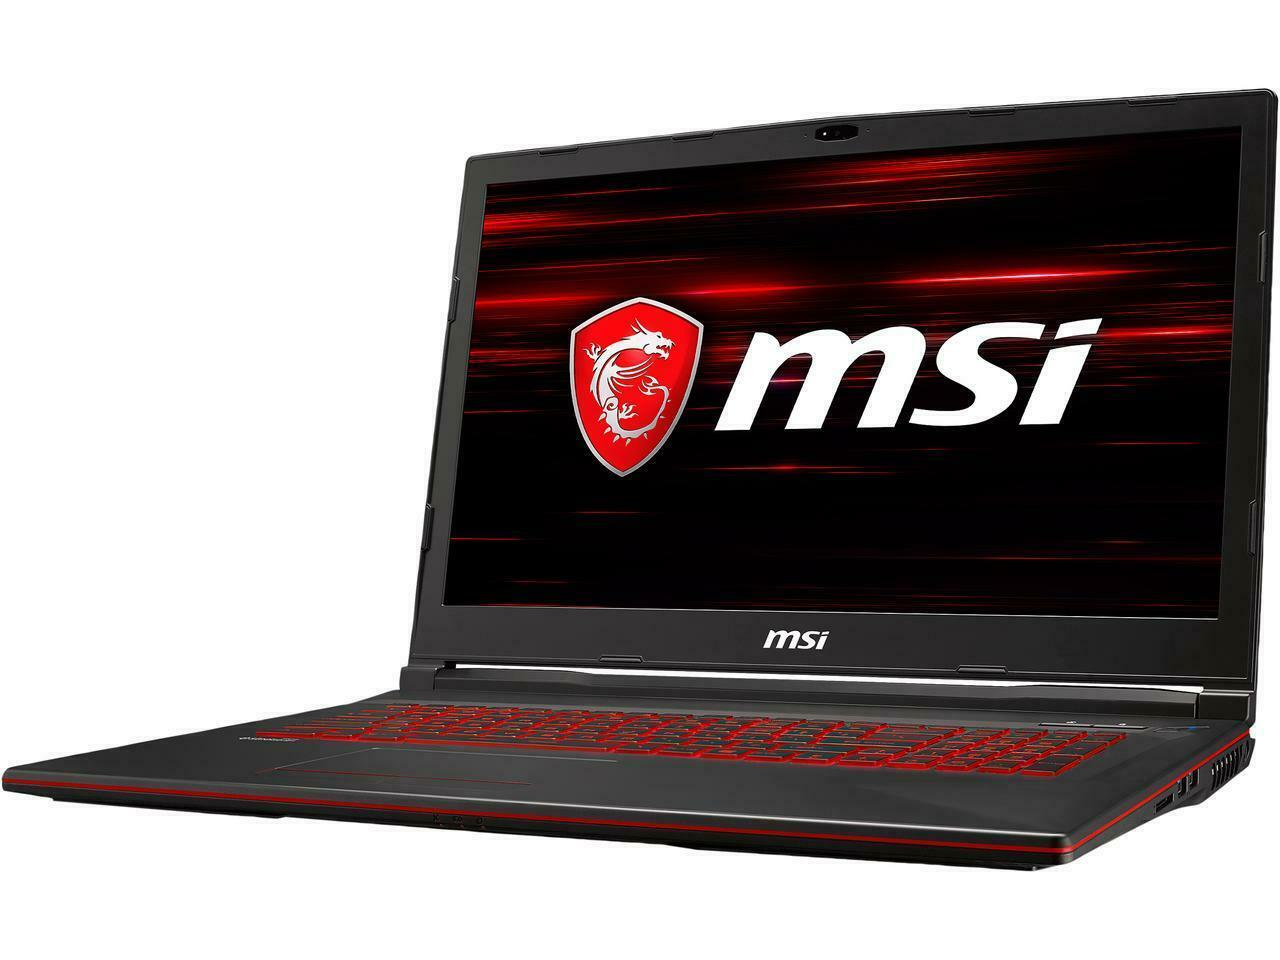 MSI GL Series 17.3" FHD Gaming Laptop (Quad i5-9300H / 8GB / 256GB SSD)